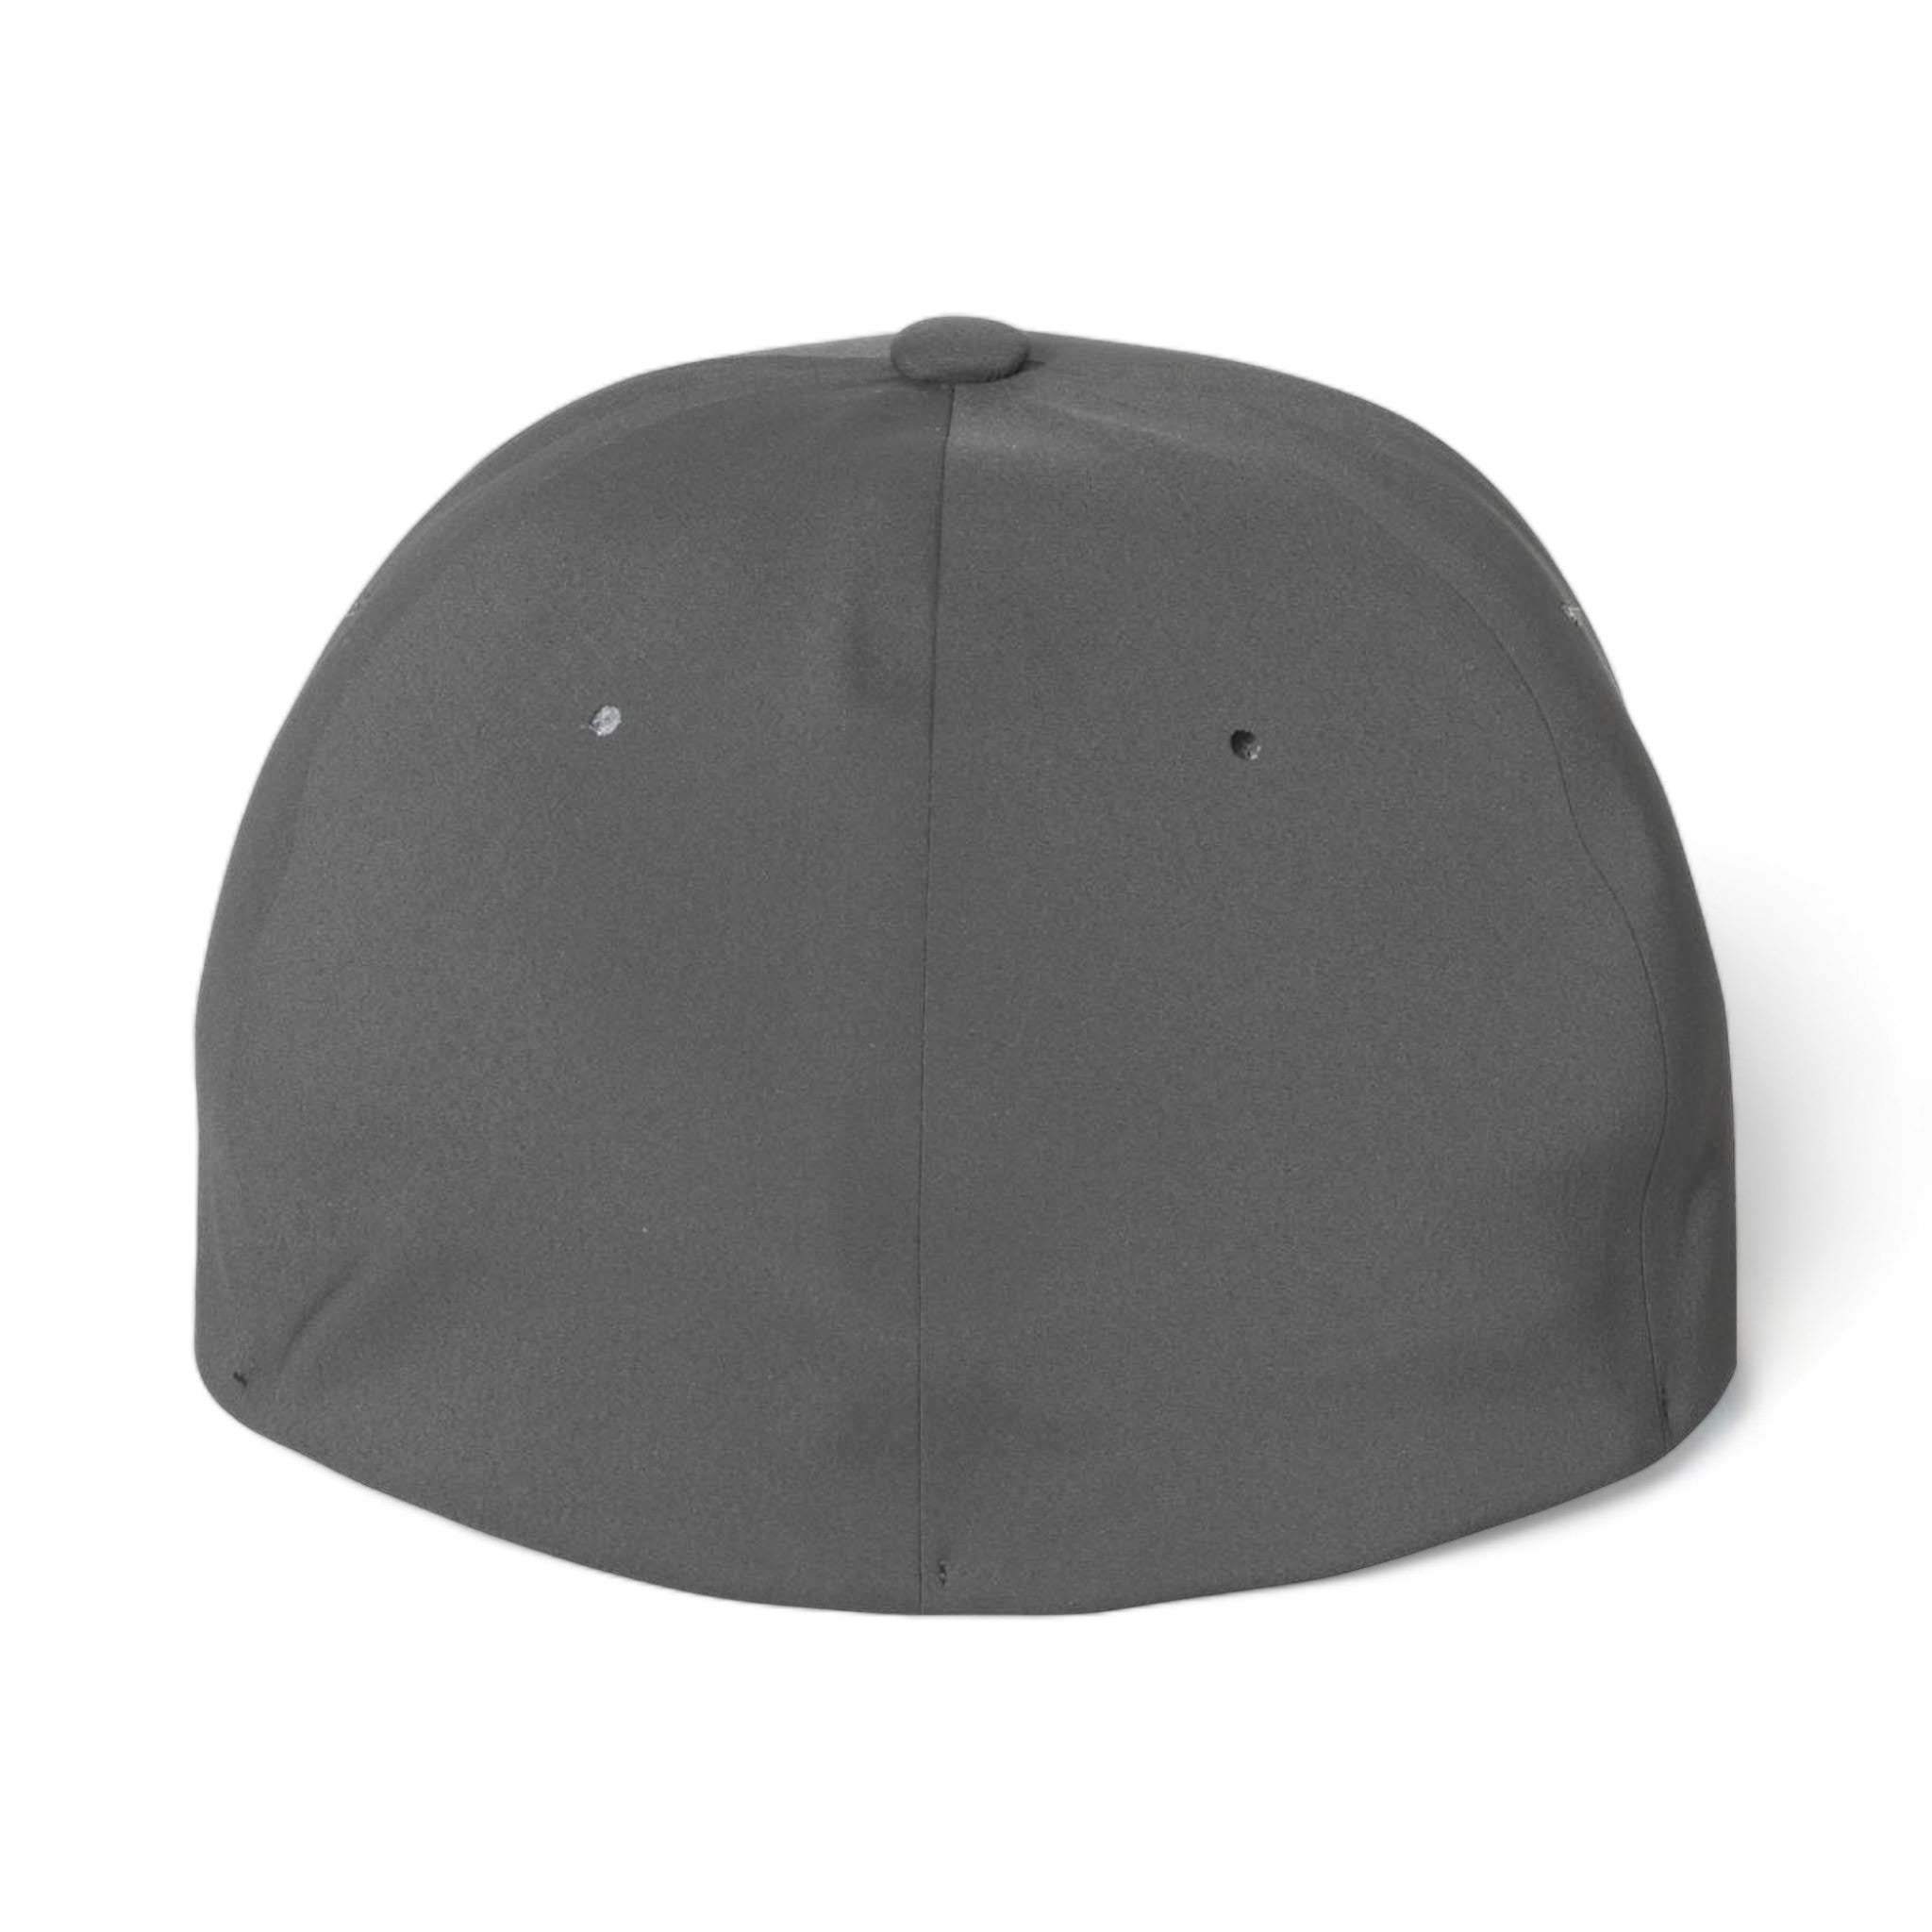 Back view of Flexfit 180 custom hat in dark grey